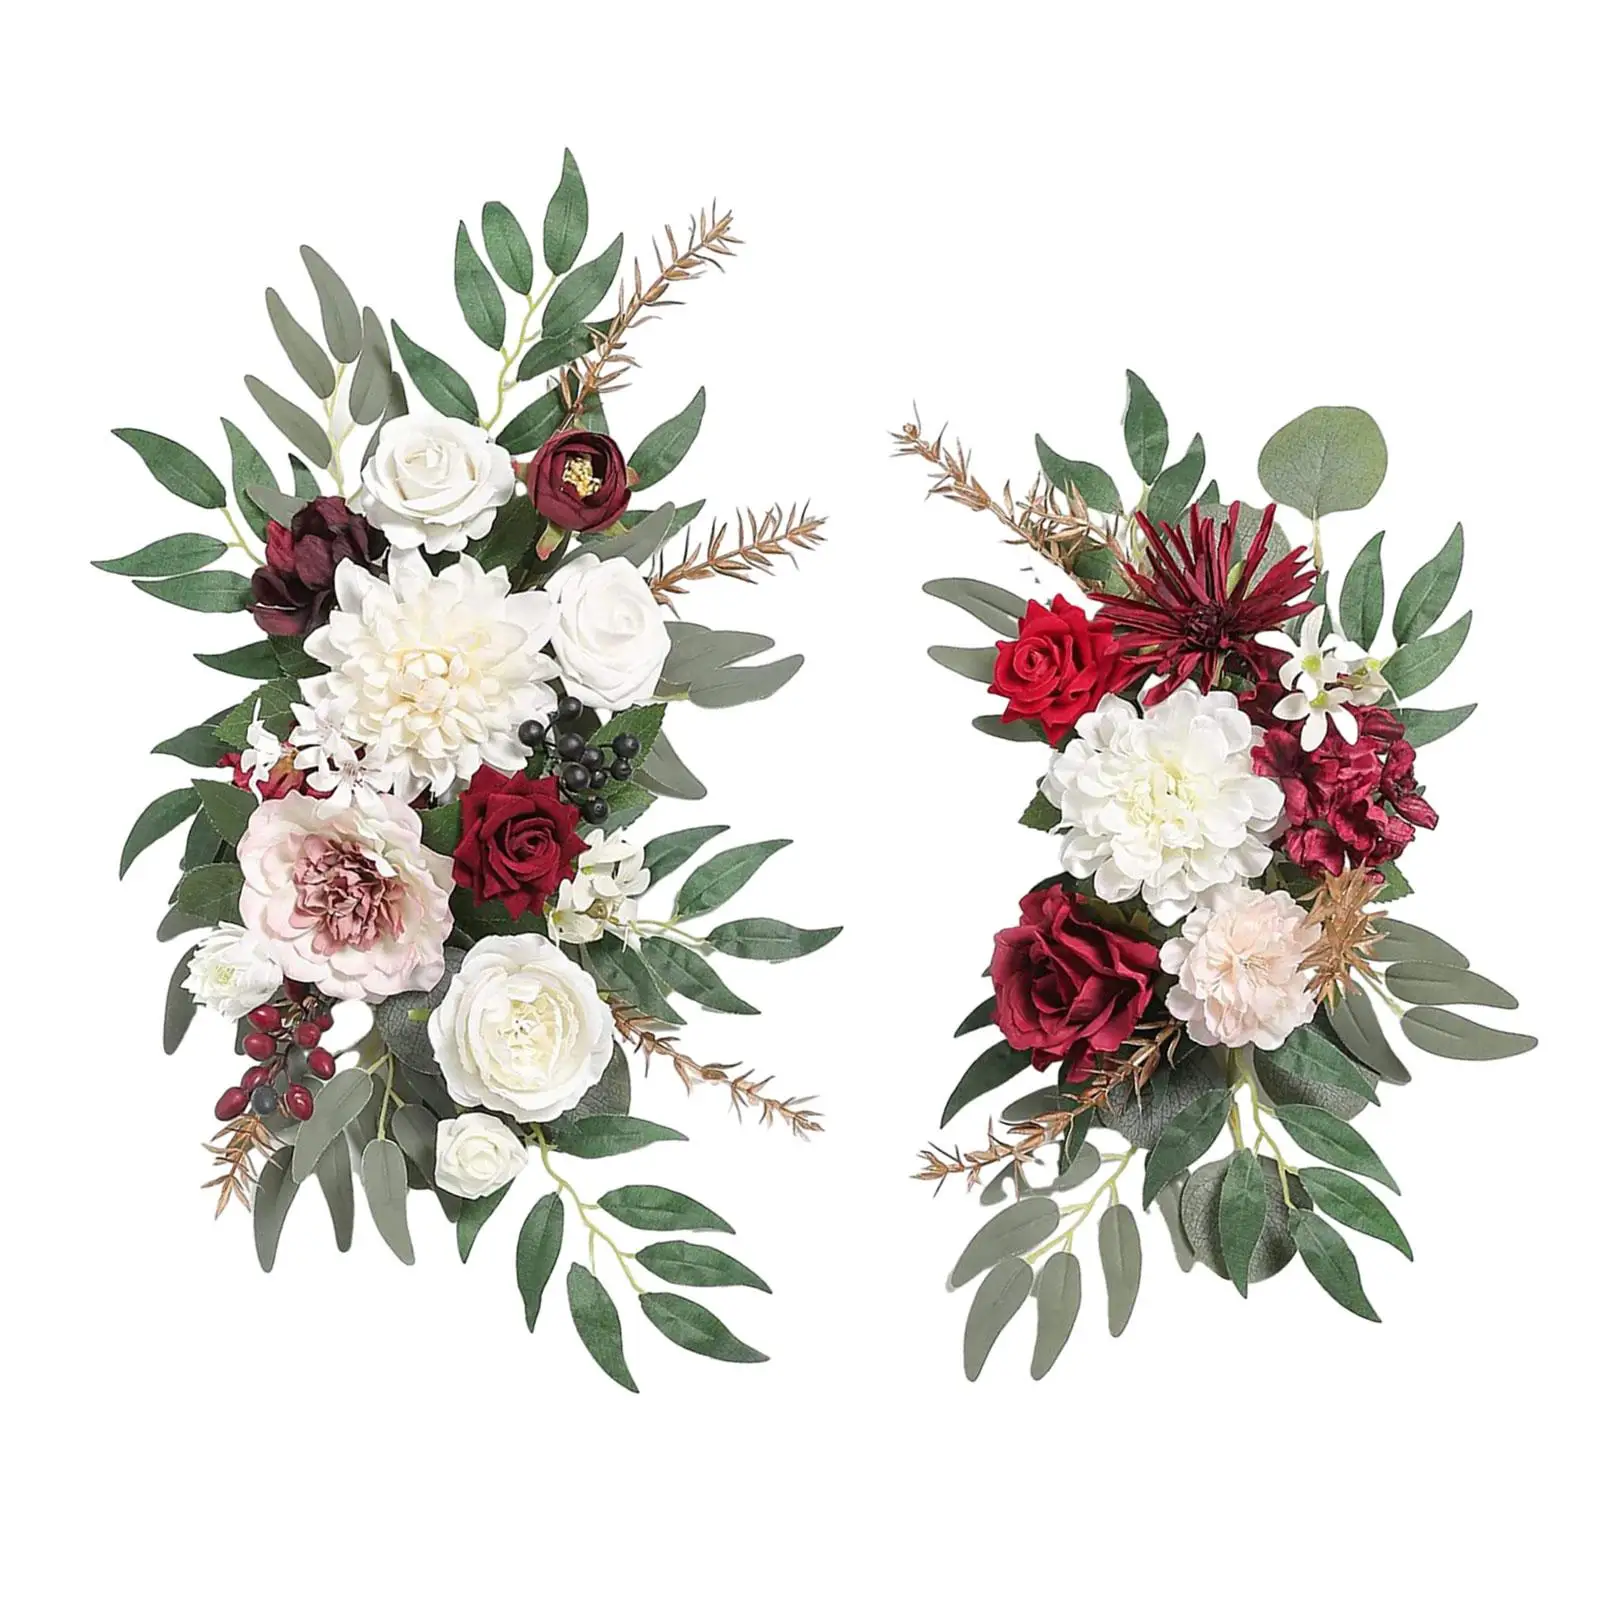 2x Wedding Arch Wreath Handmade Flower Arrangement Centerpiece Garland Floral Backdrop for Wedding Car Door Ceremony Decor Party